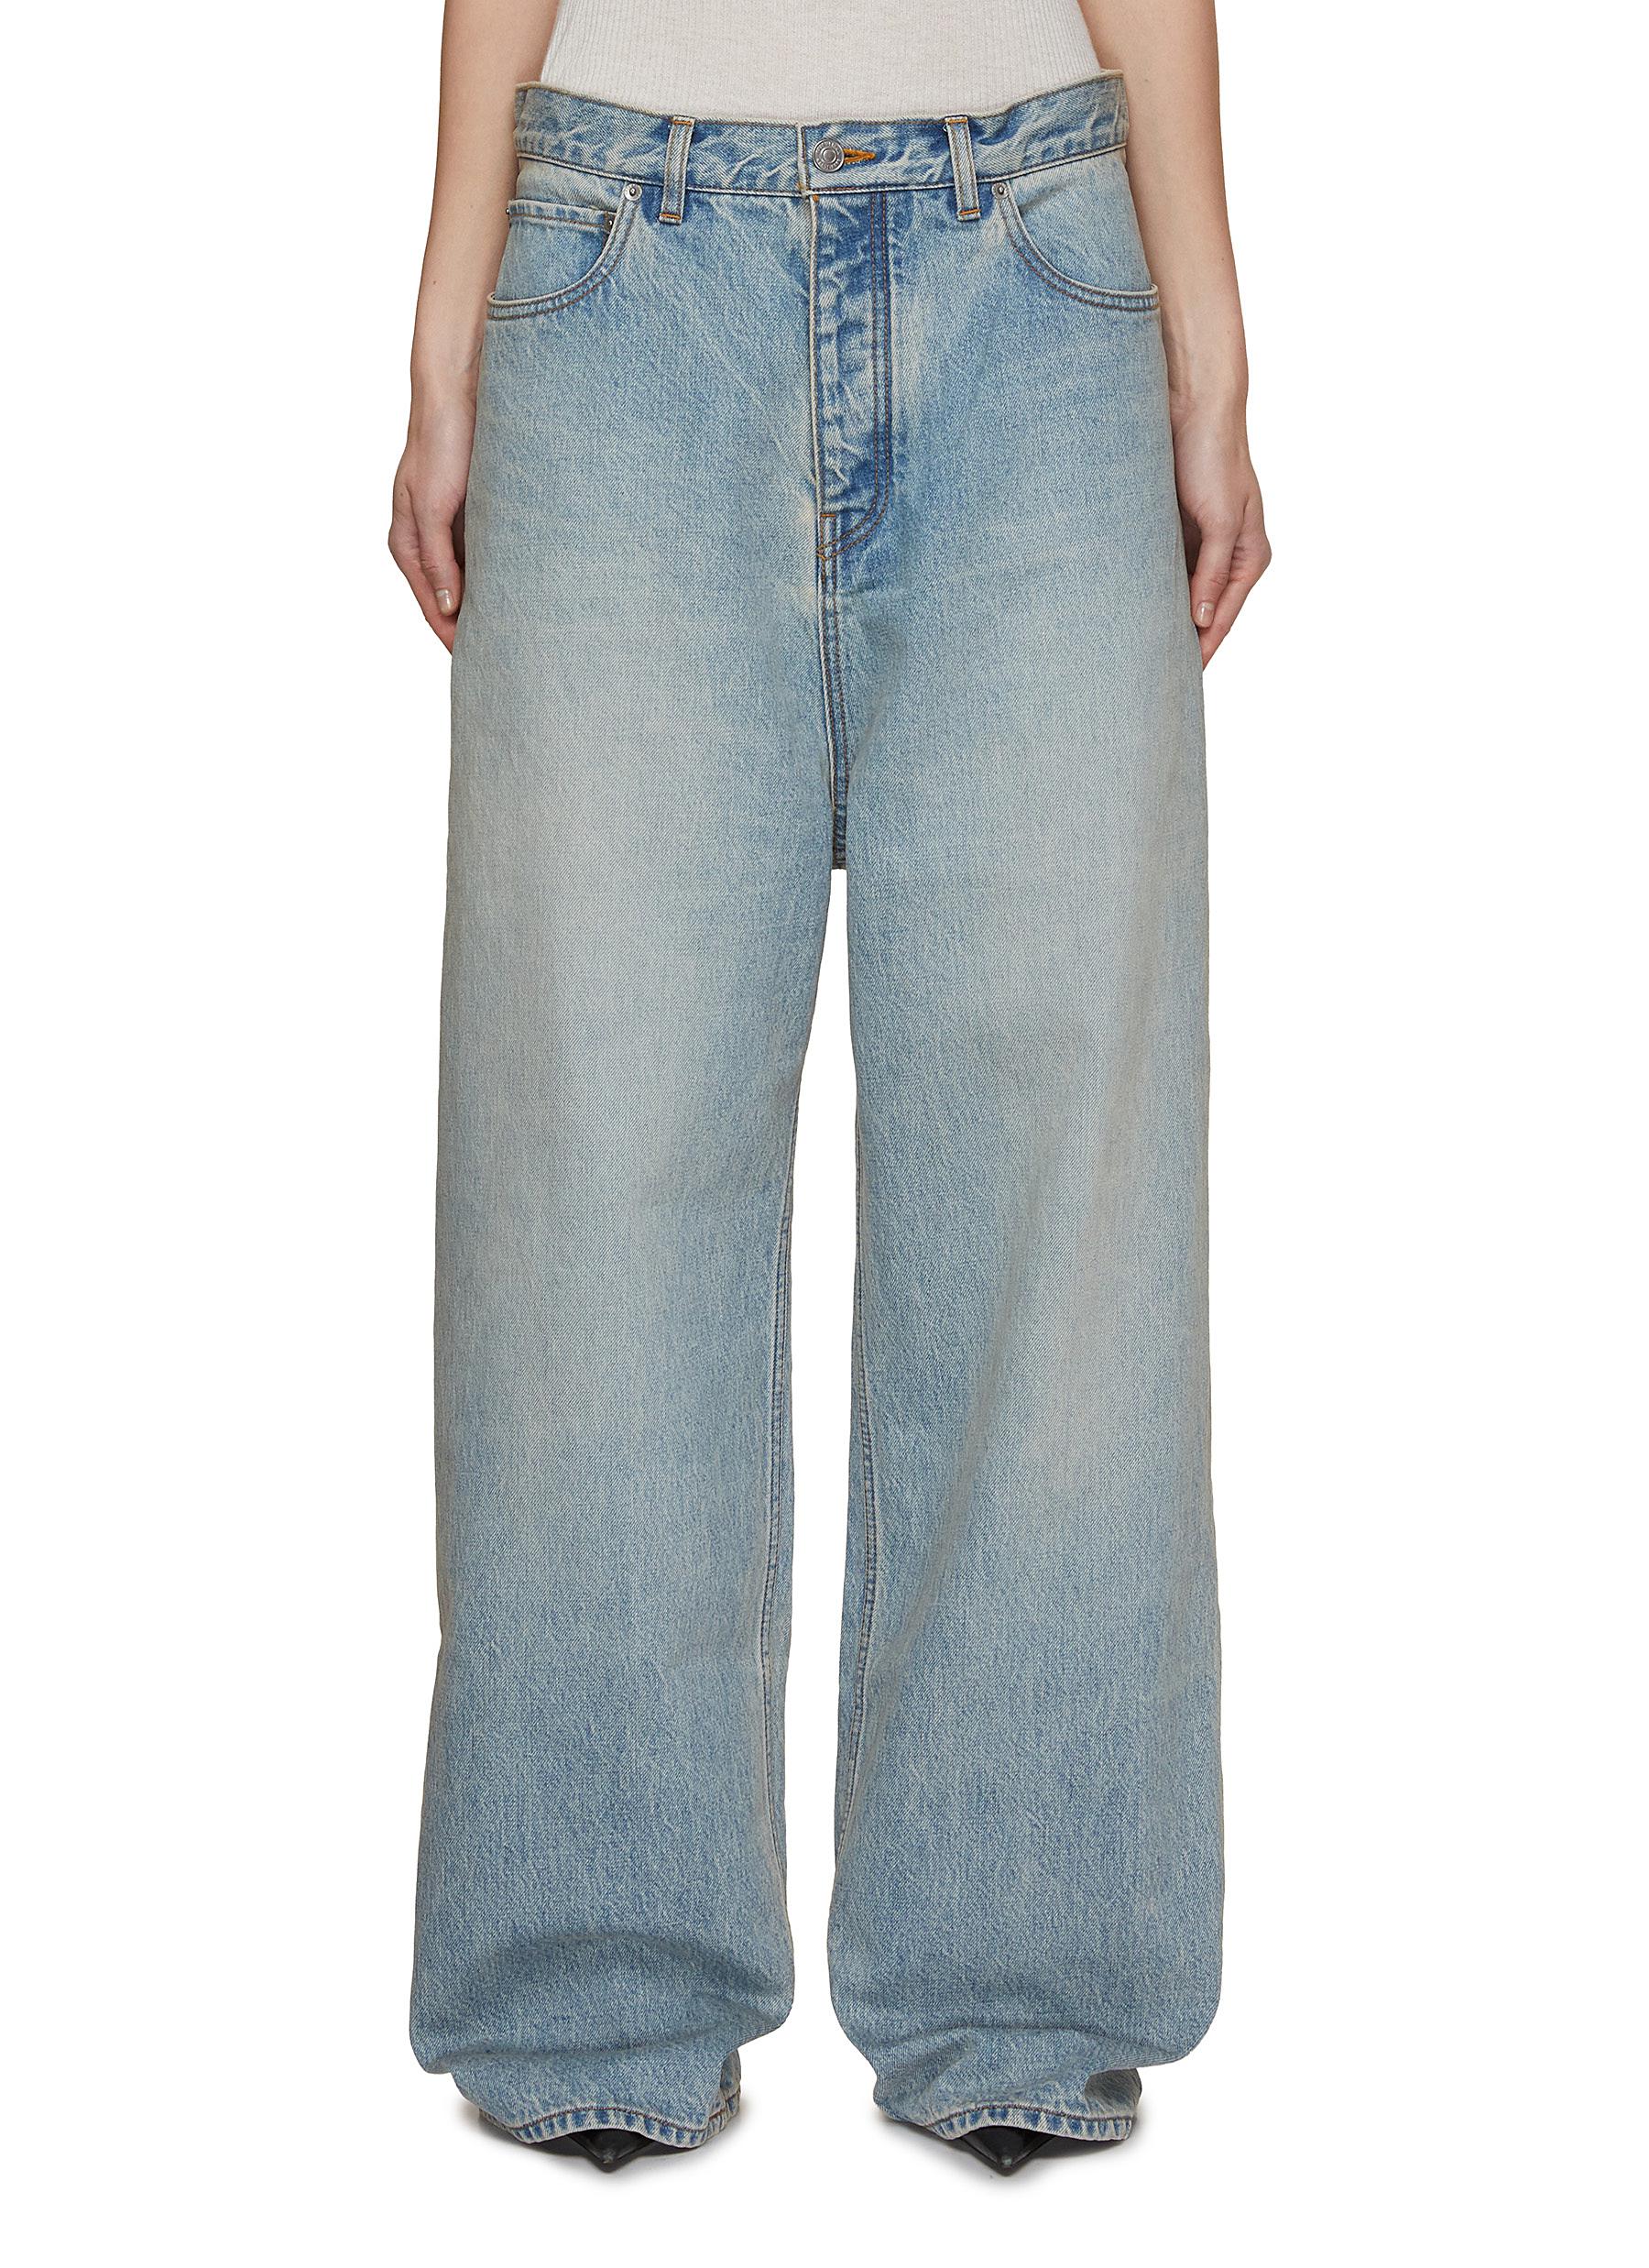 BALENCIAGA, Japanese Denim Baggy Jeans, Women